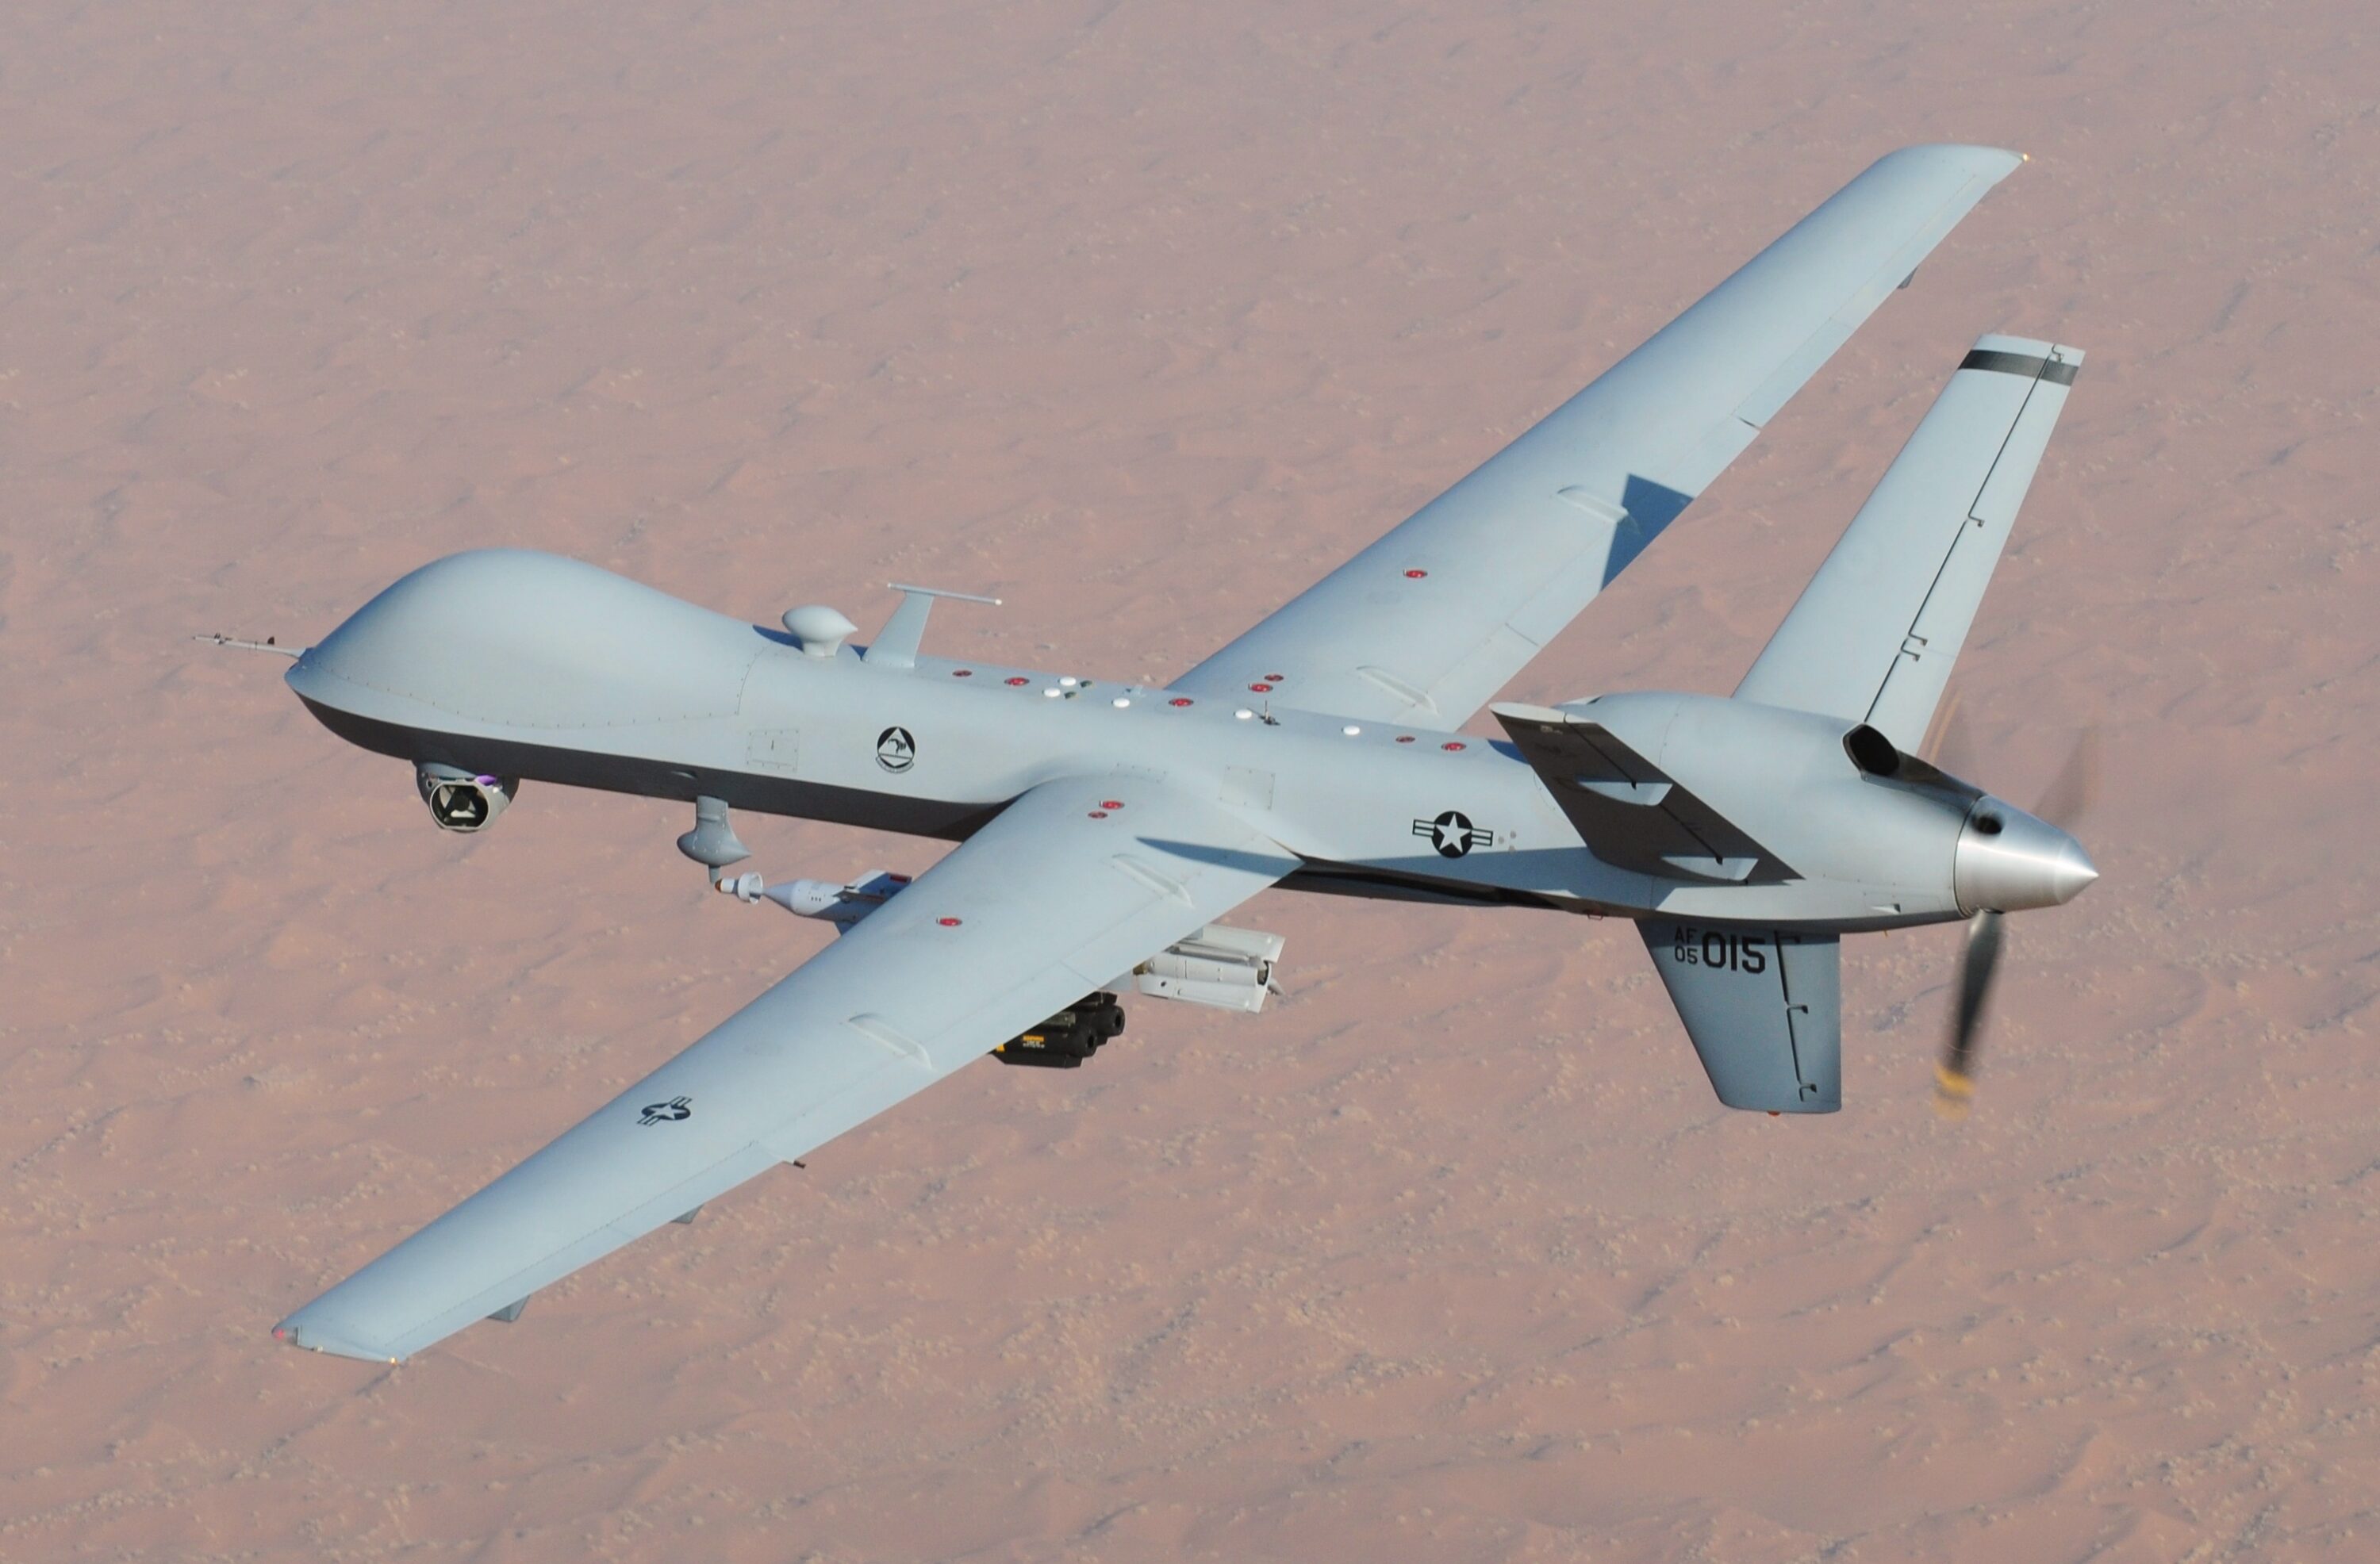 U.S. Air Force MQ-9 Reaper Unmanned Aerial Vehicle (UAV)